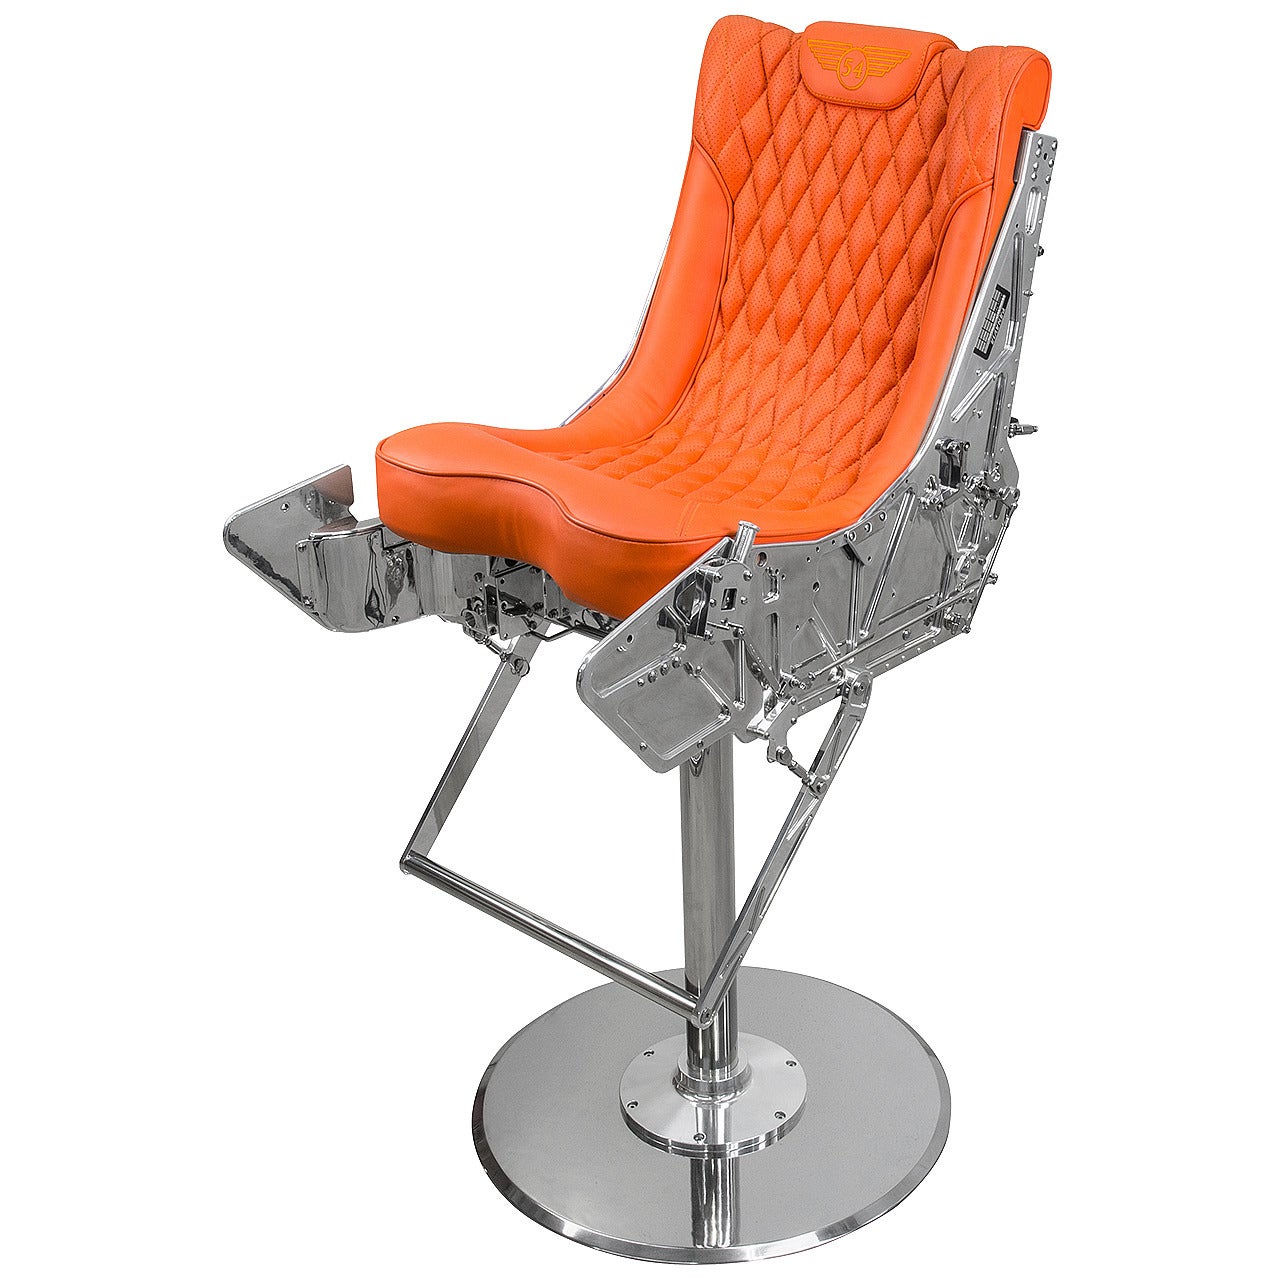 Martin Baker MK10 Ejection Seat Barstool